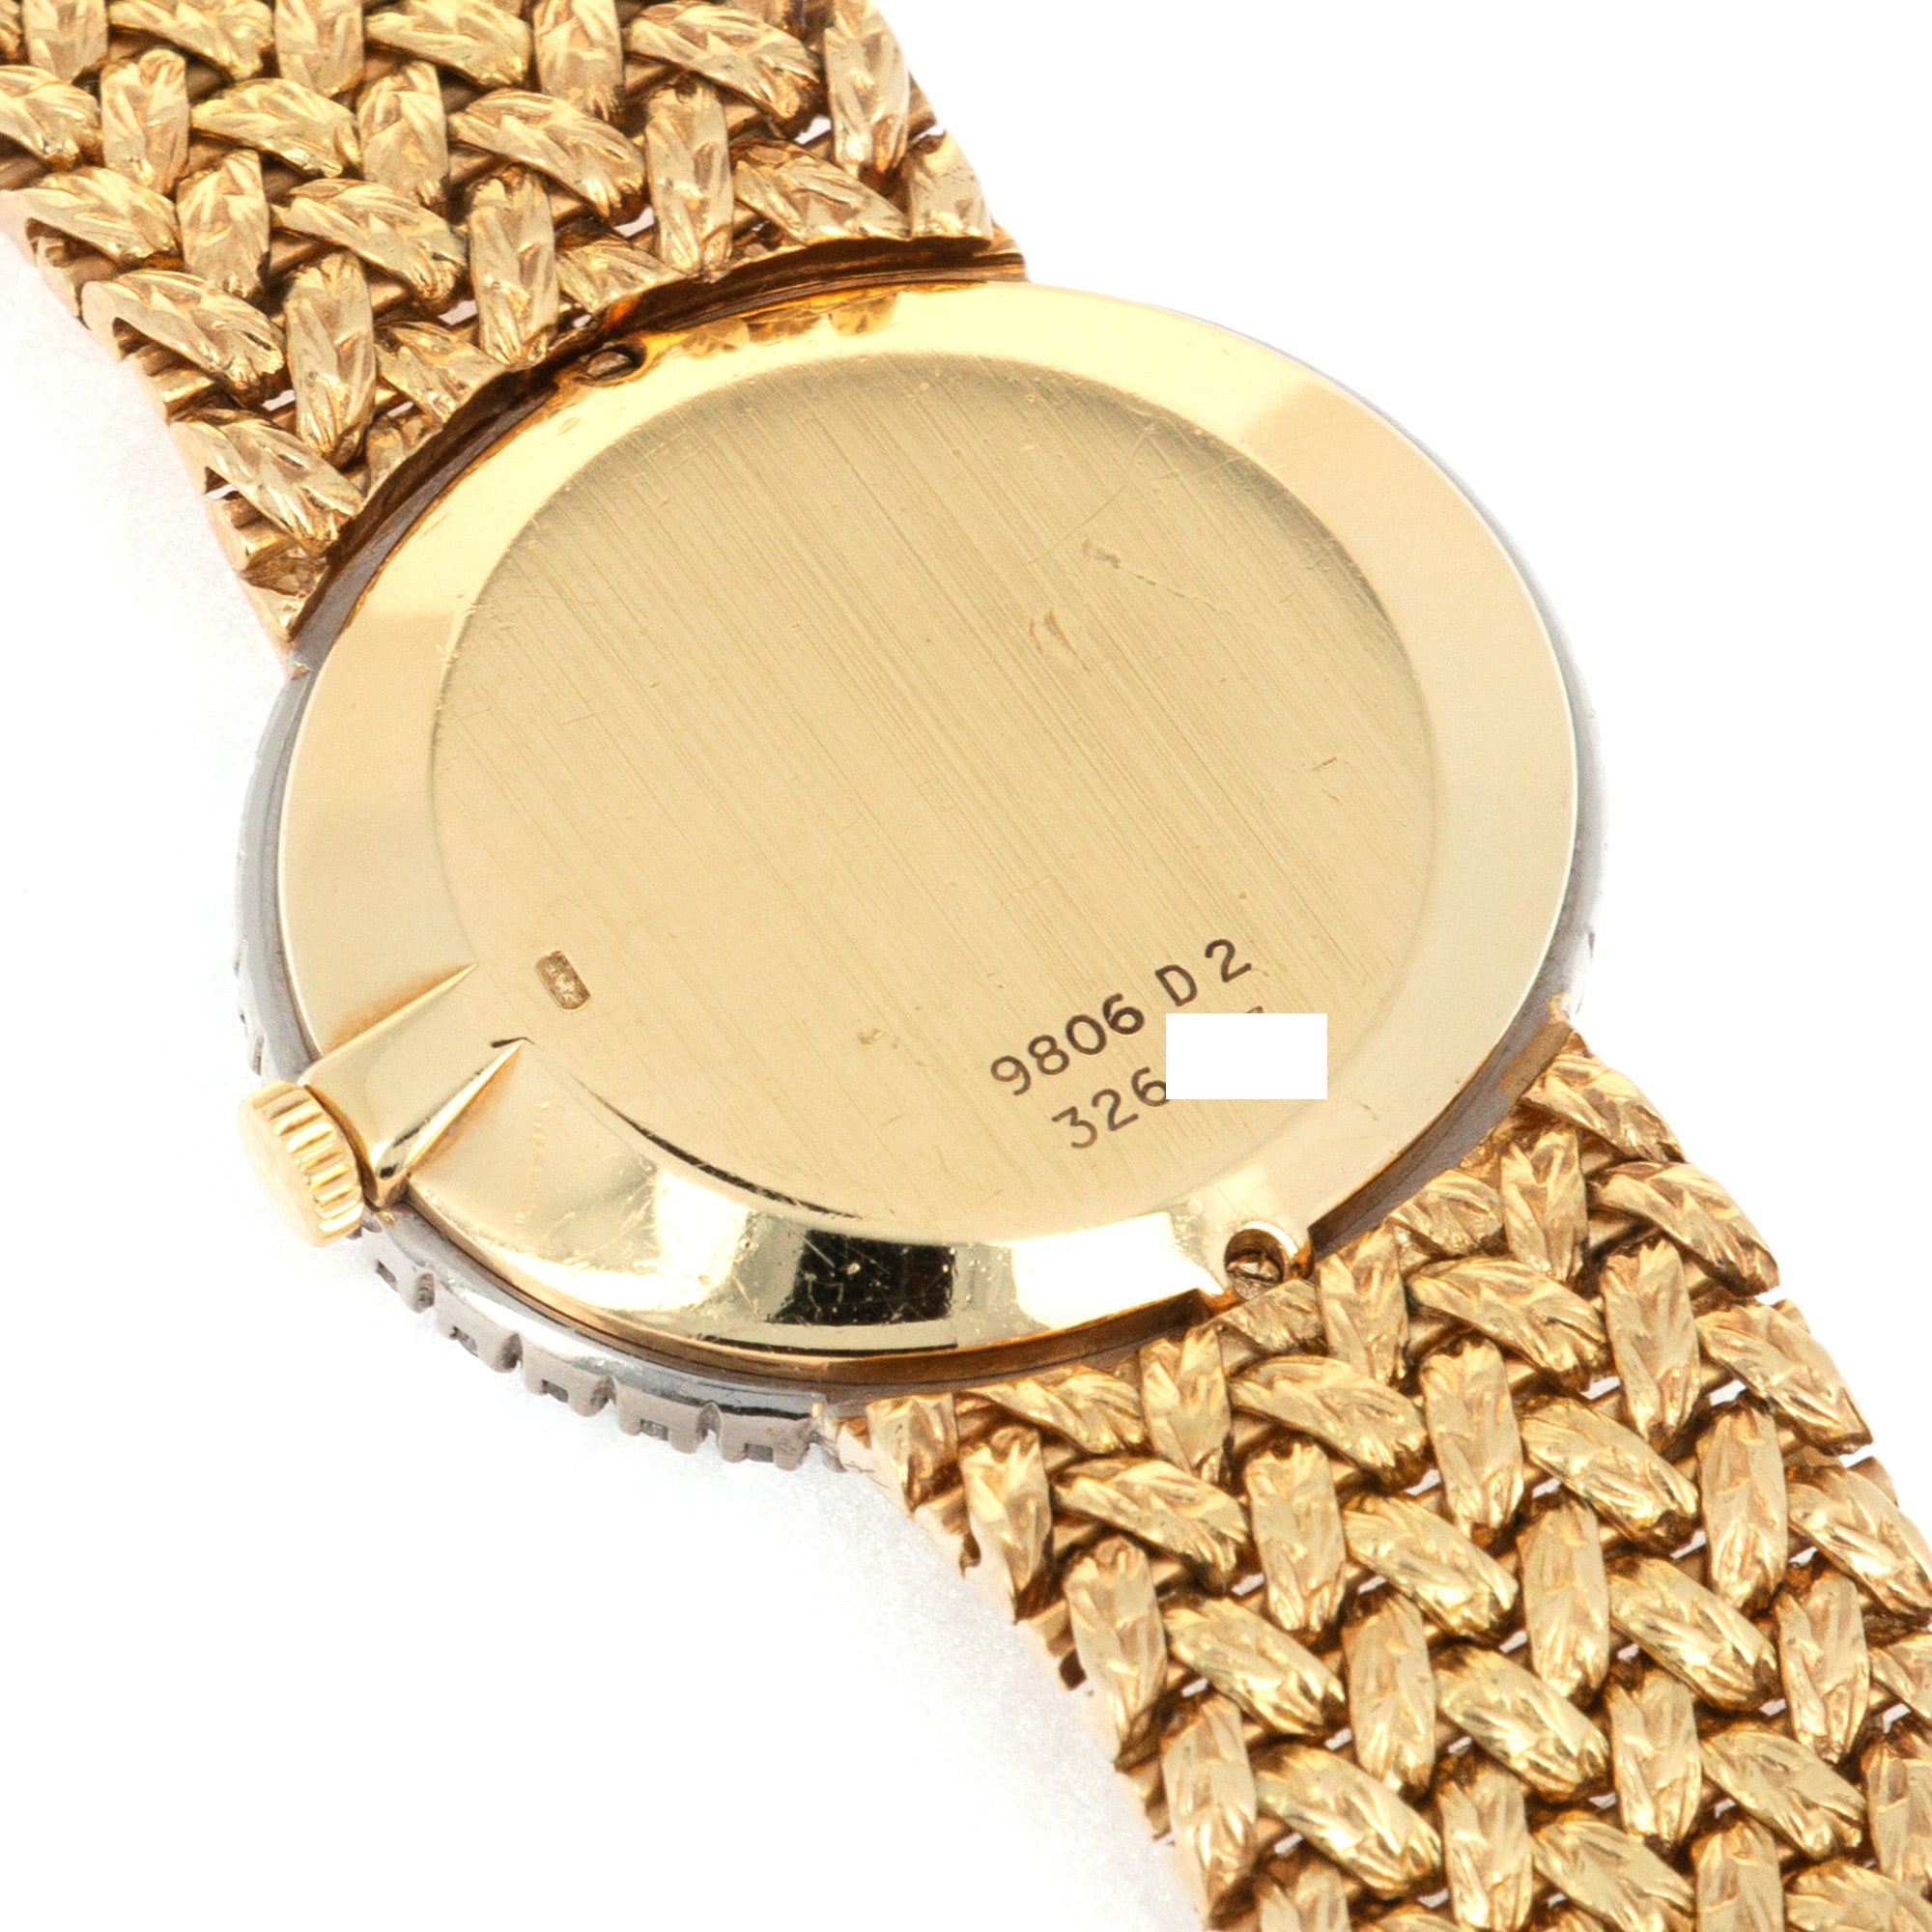 Piaget - Piaget Yellow Gold Lapis Diamond Watch, 1970s - The Keystone Watches